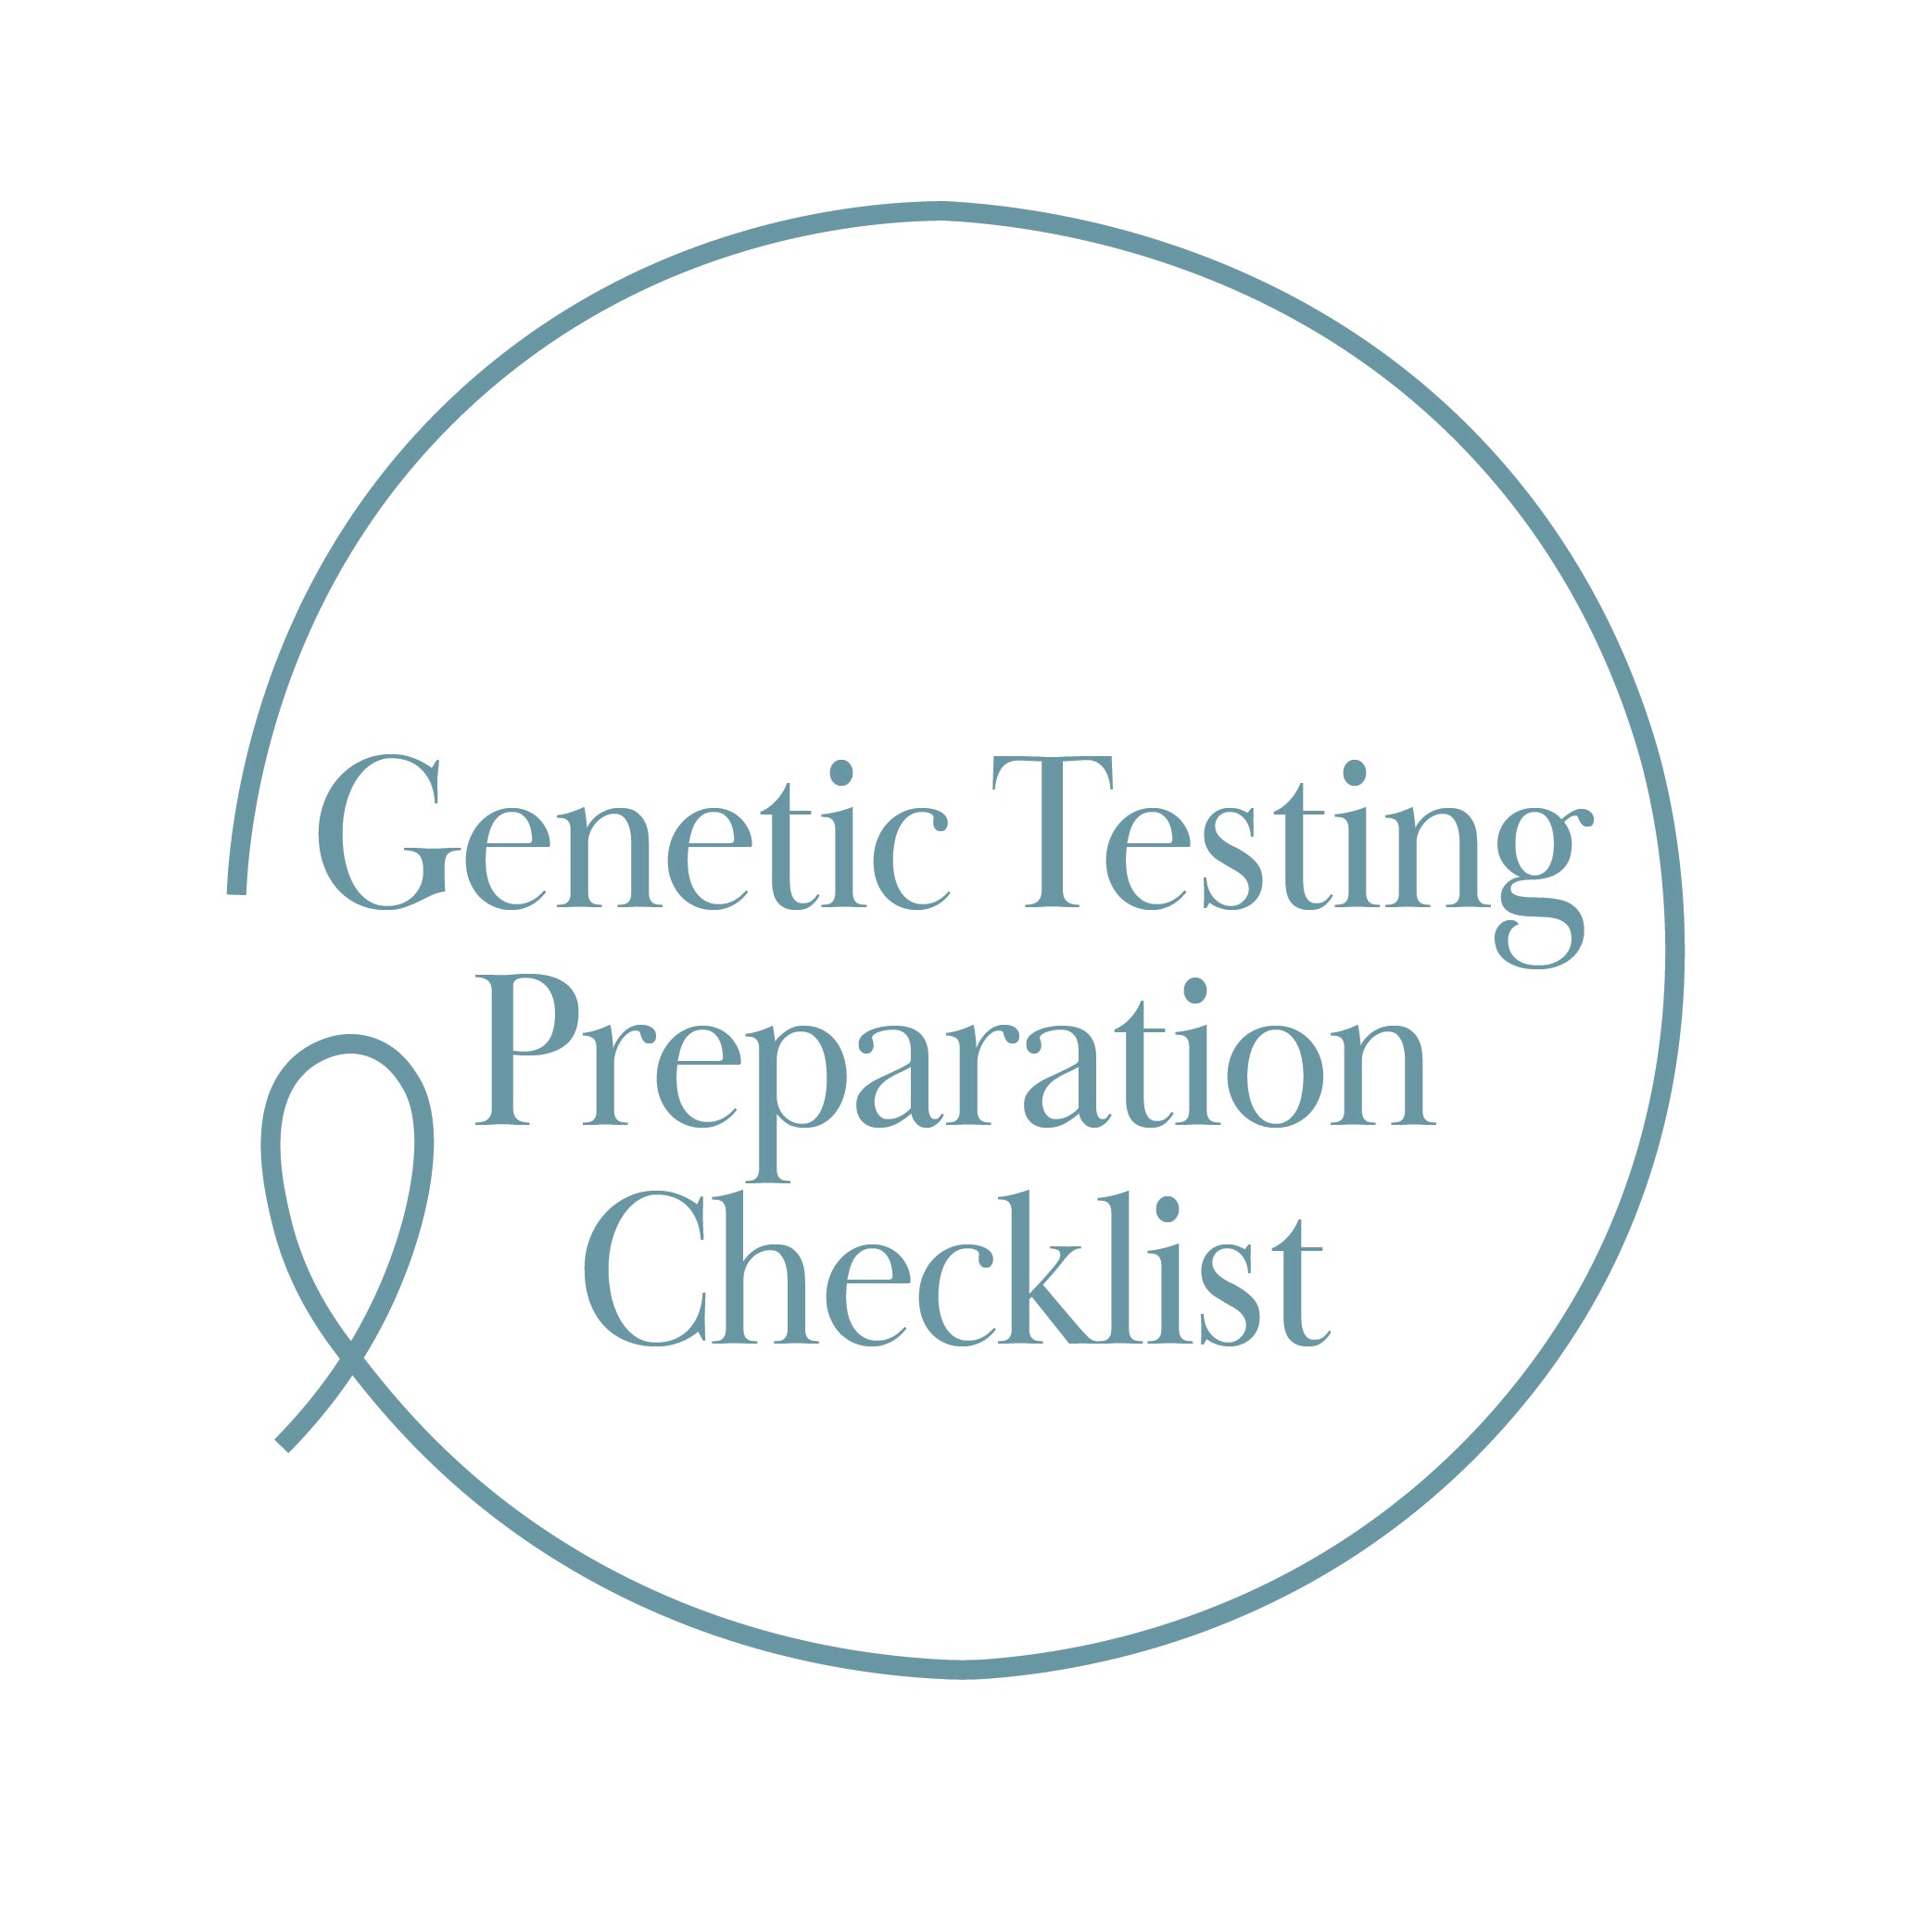 Genetic Testing Preparation Checklist